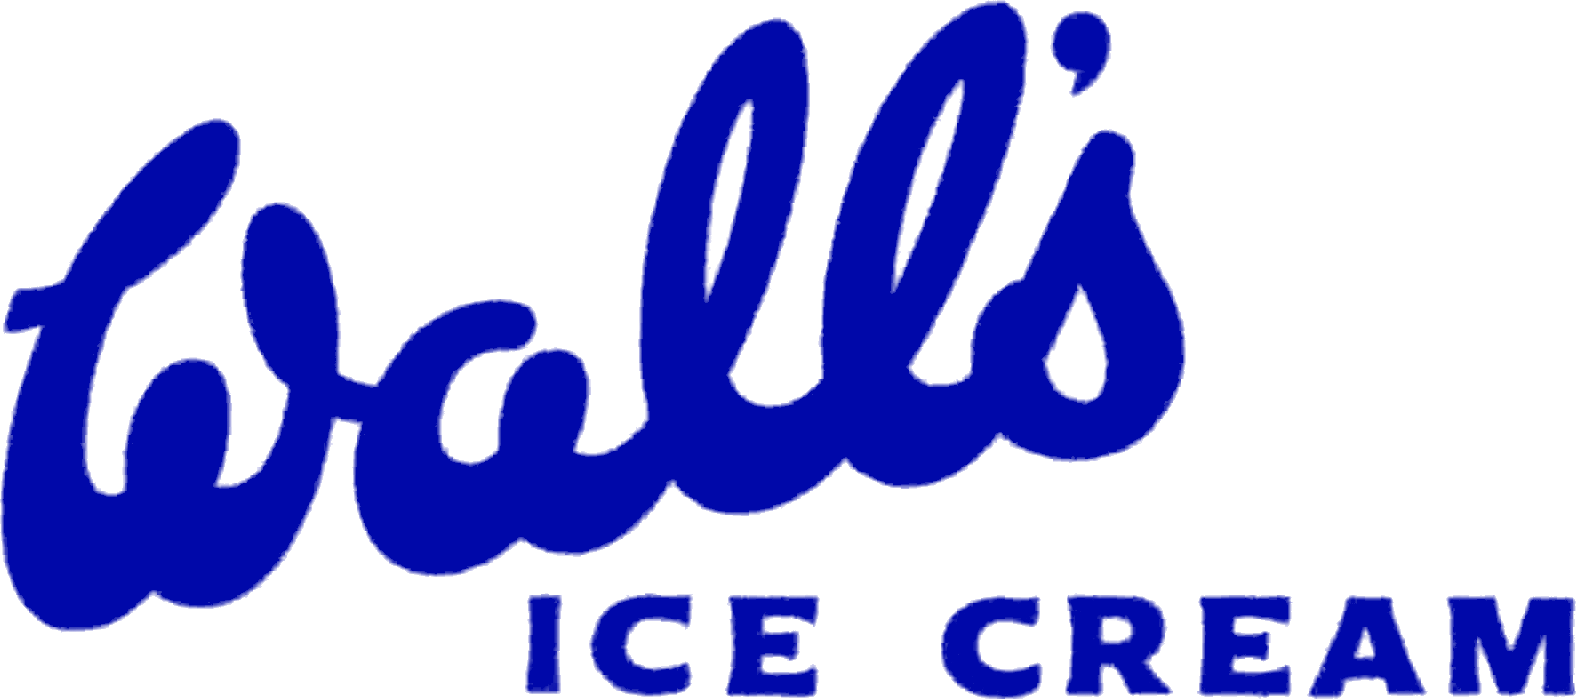 Wall's Logo - old logo for Walls Ice Cream | Logo 商標 | Walls ice cream, Old logo ...